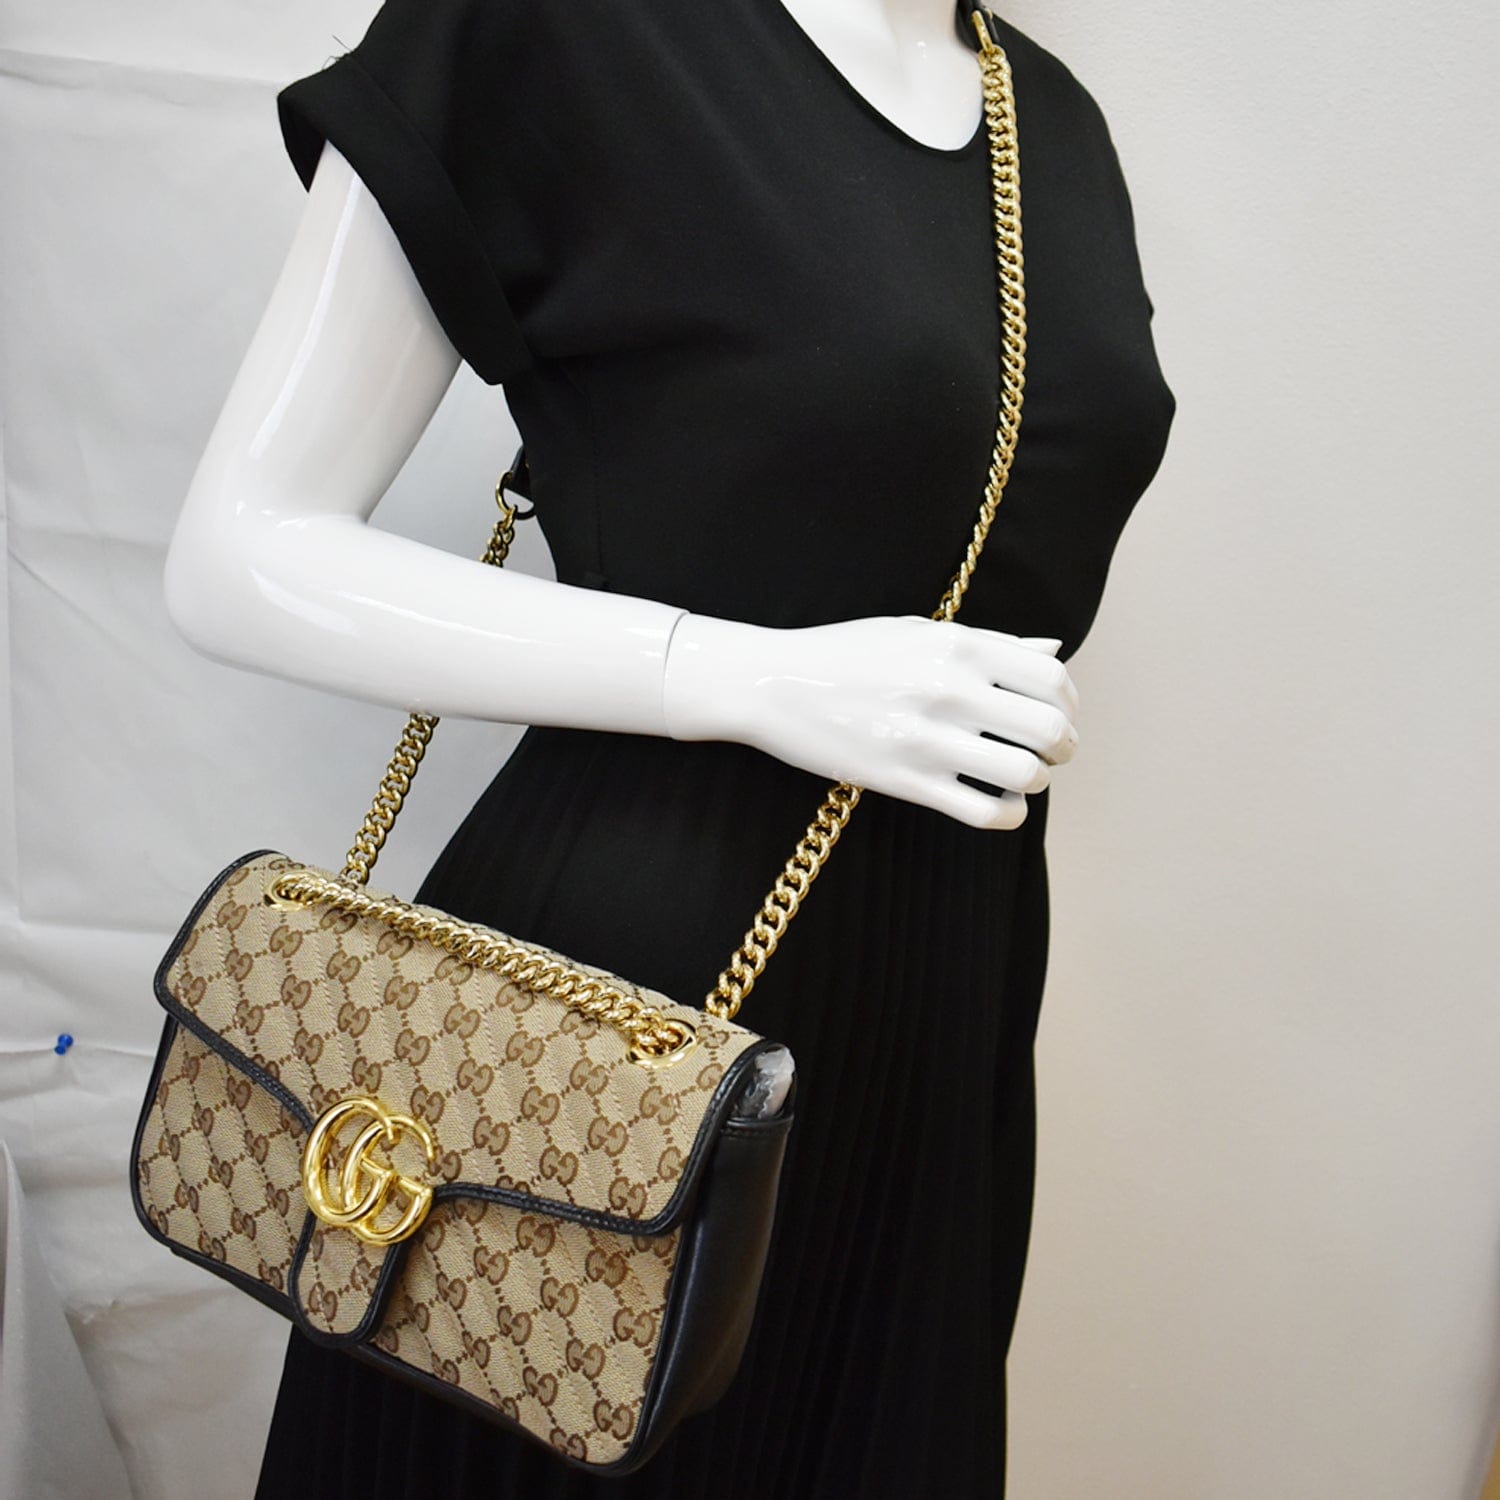 Gucci GG Marmont Small Matelasse Canvas Shoulder Bag Black 443497